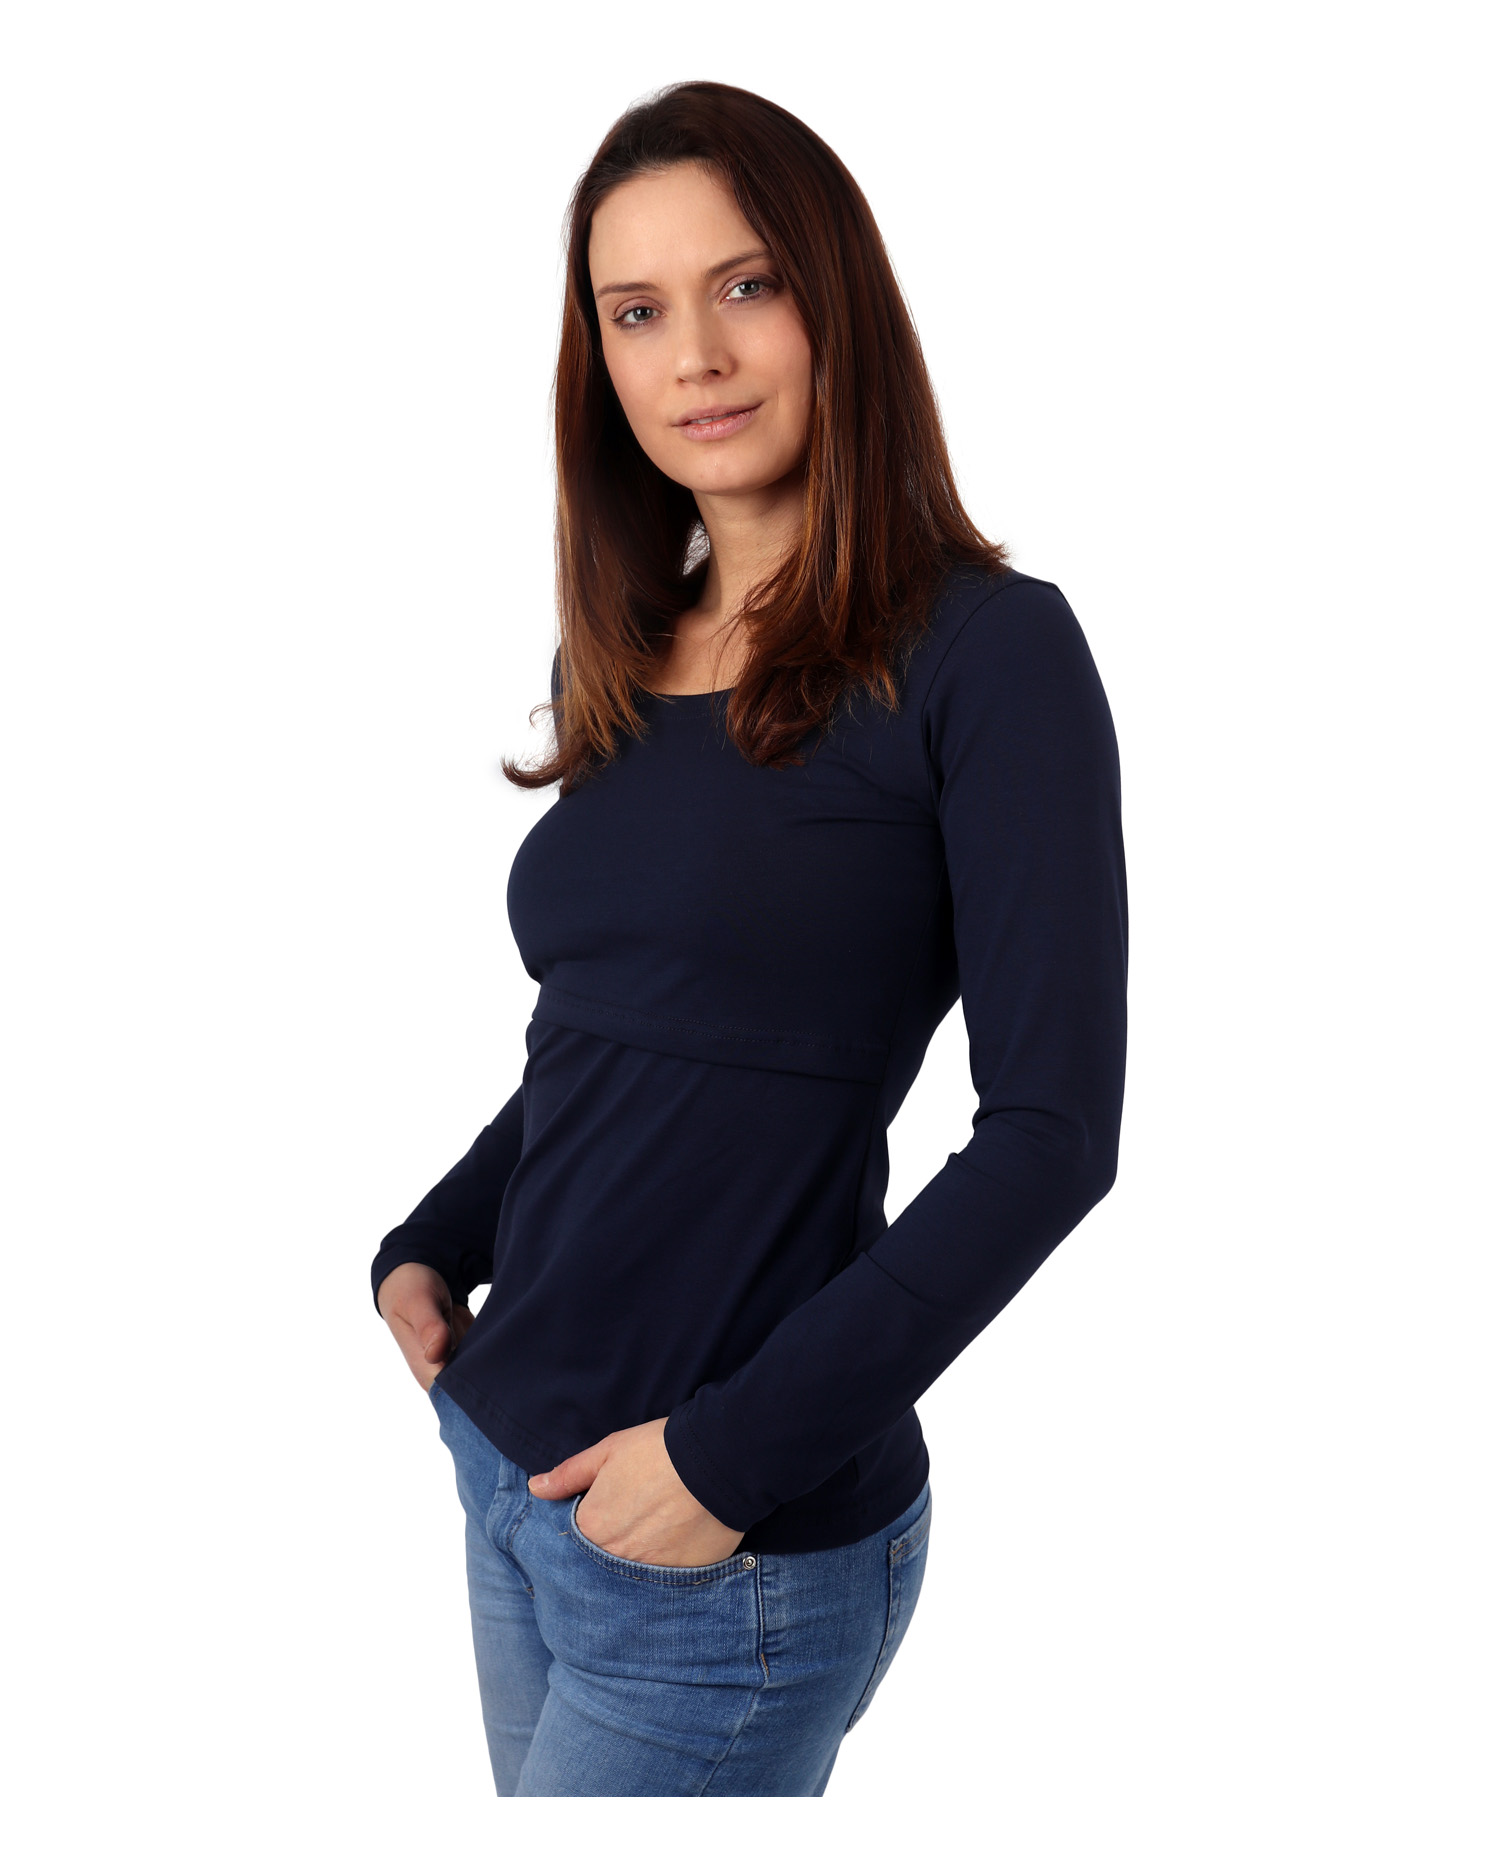 Breast-feeding T-shirt Katerina, long sleeves, olive